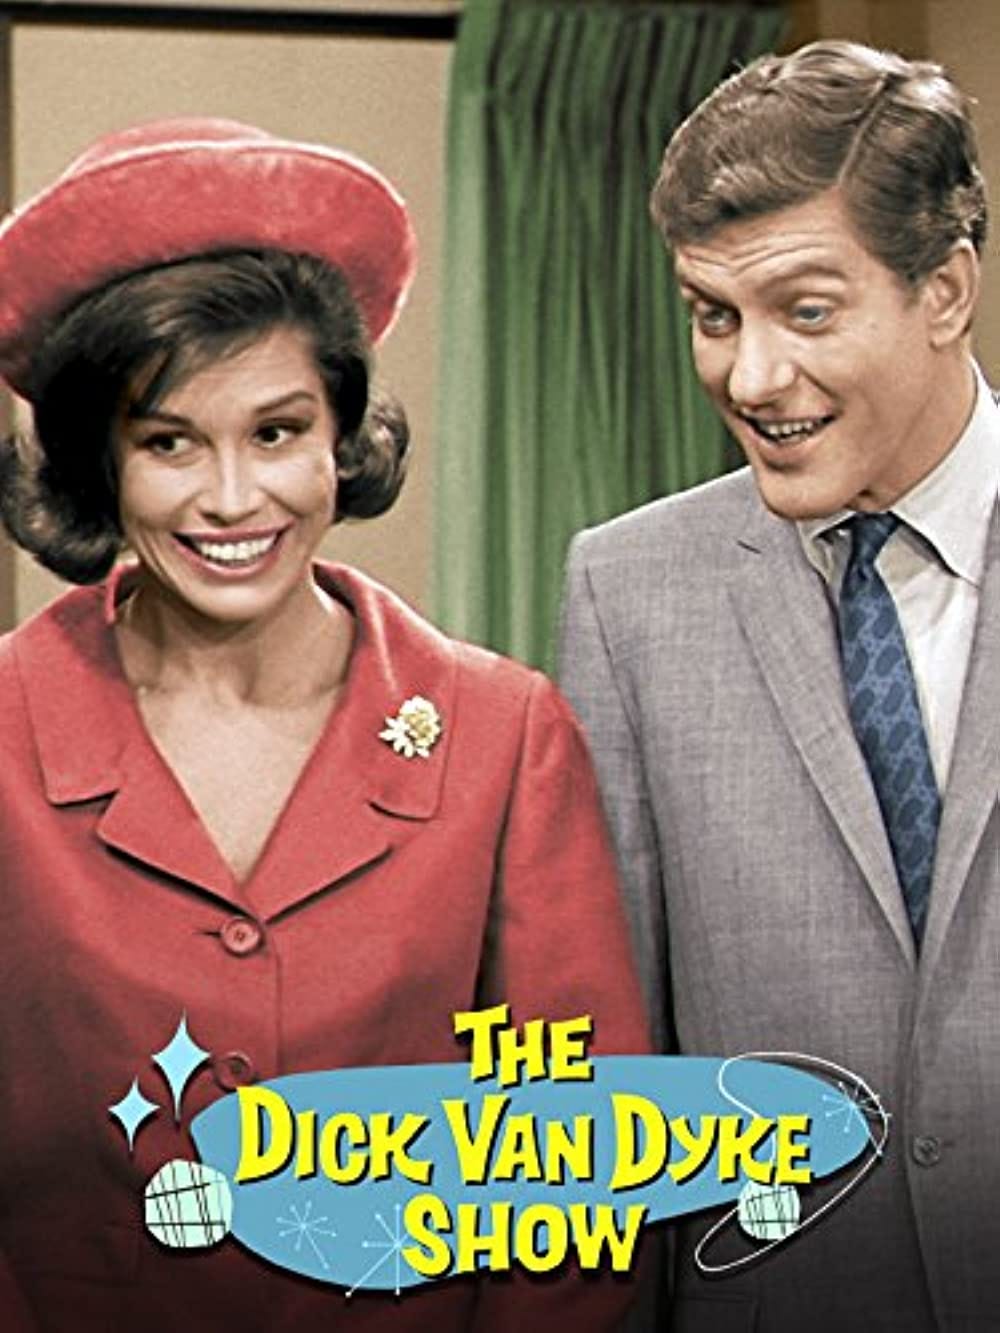 The Dick Van Dyke Show: Now in Living Color! (TV Movie 2016) - IMDb